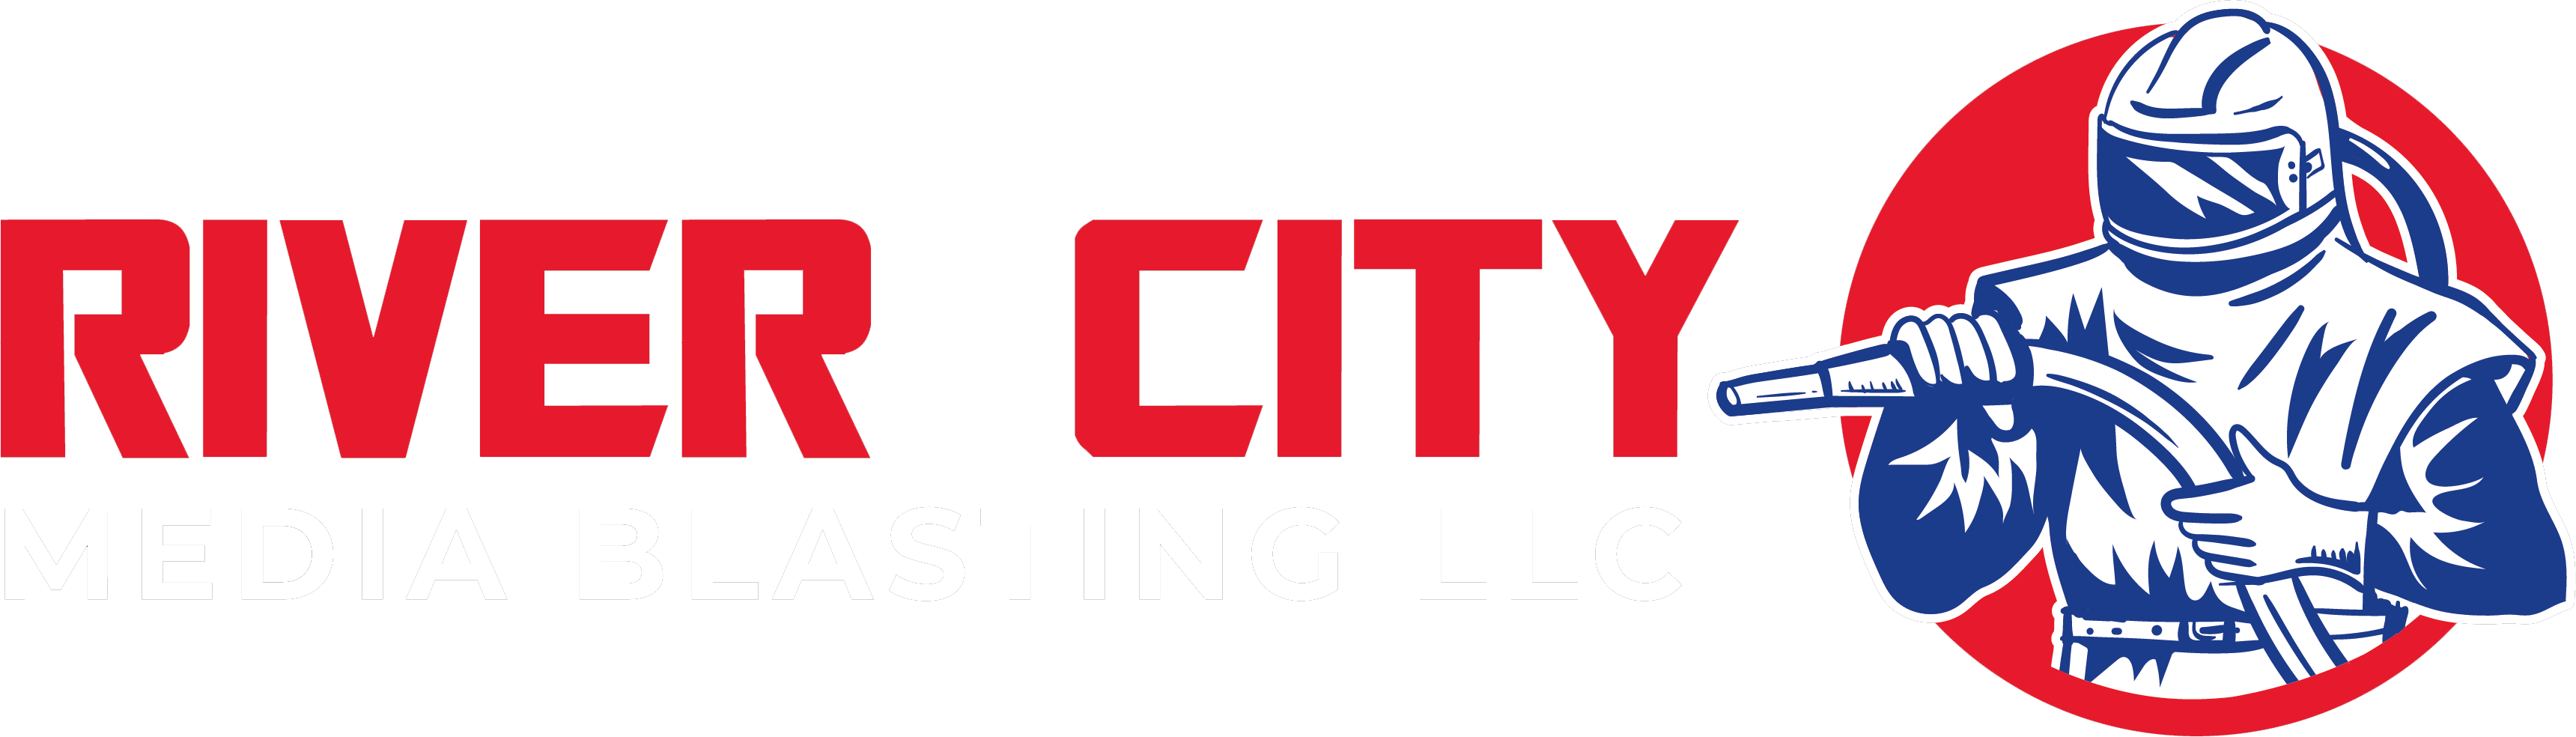 river city media blasting llc logo